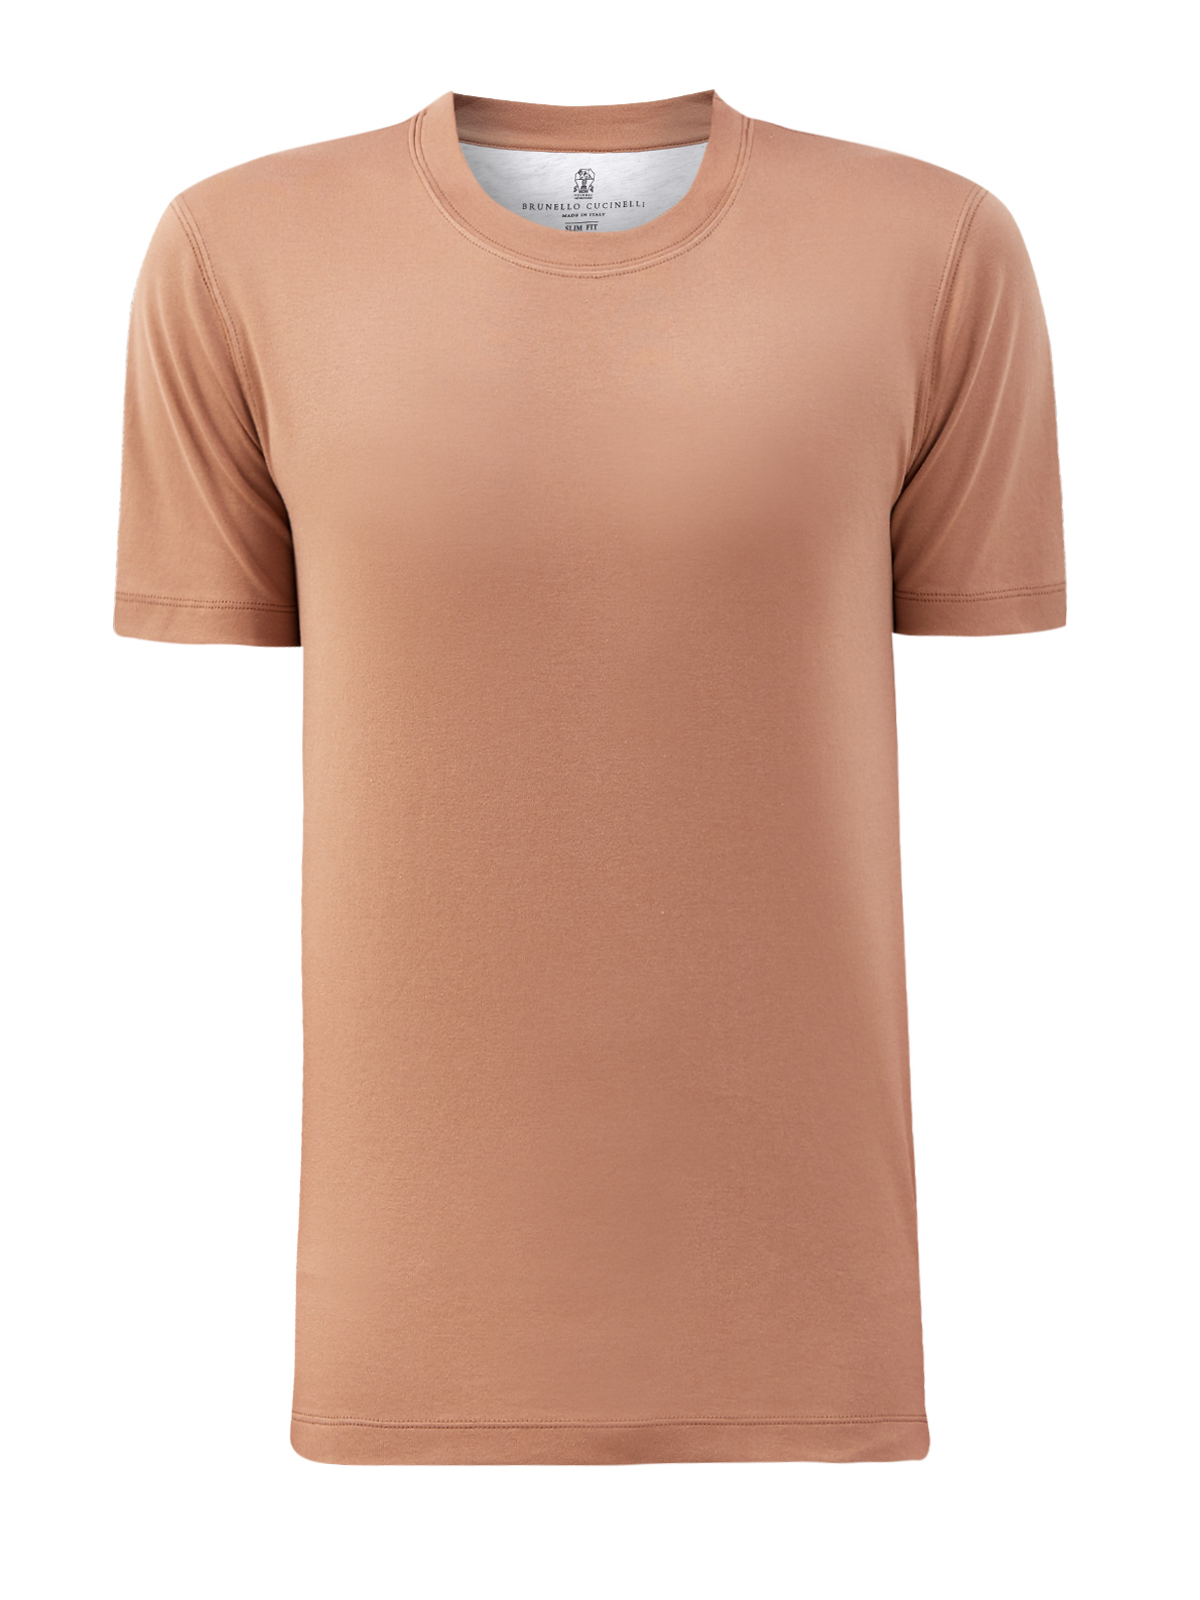 Однотонная футболка Slim Fit из мягкого джерси BRUNELLO CUCINELLI, цвет бежевый, размер 52;54;48 - фото 1